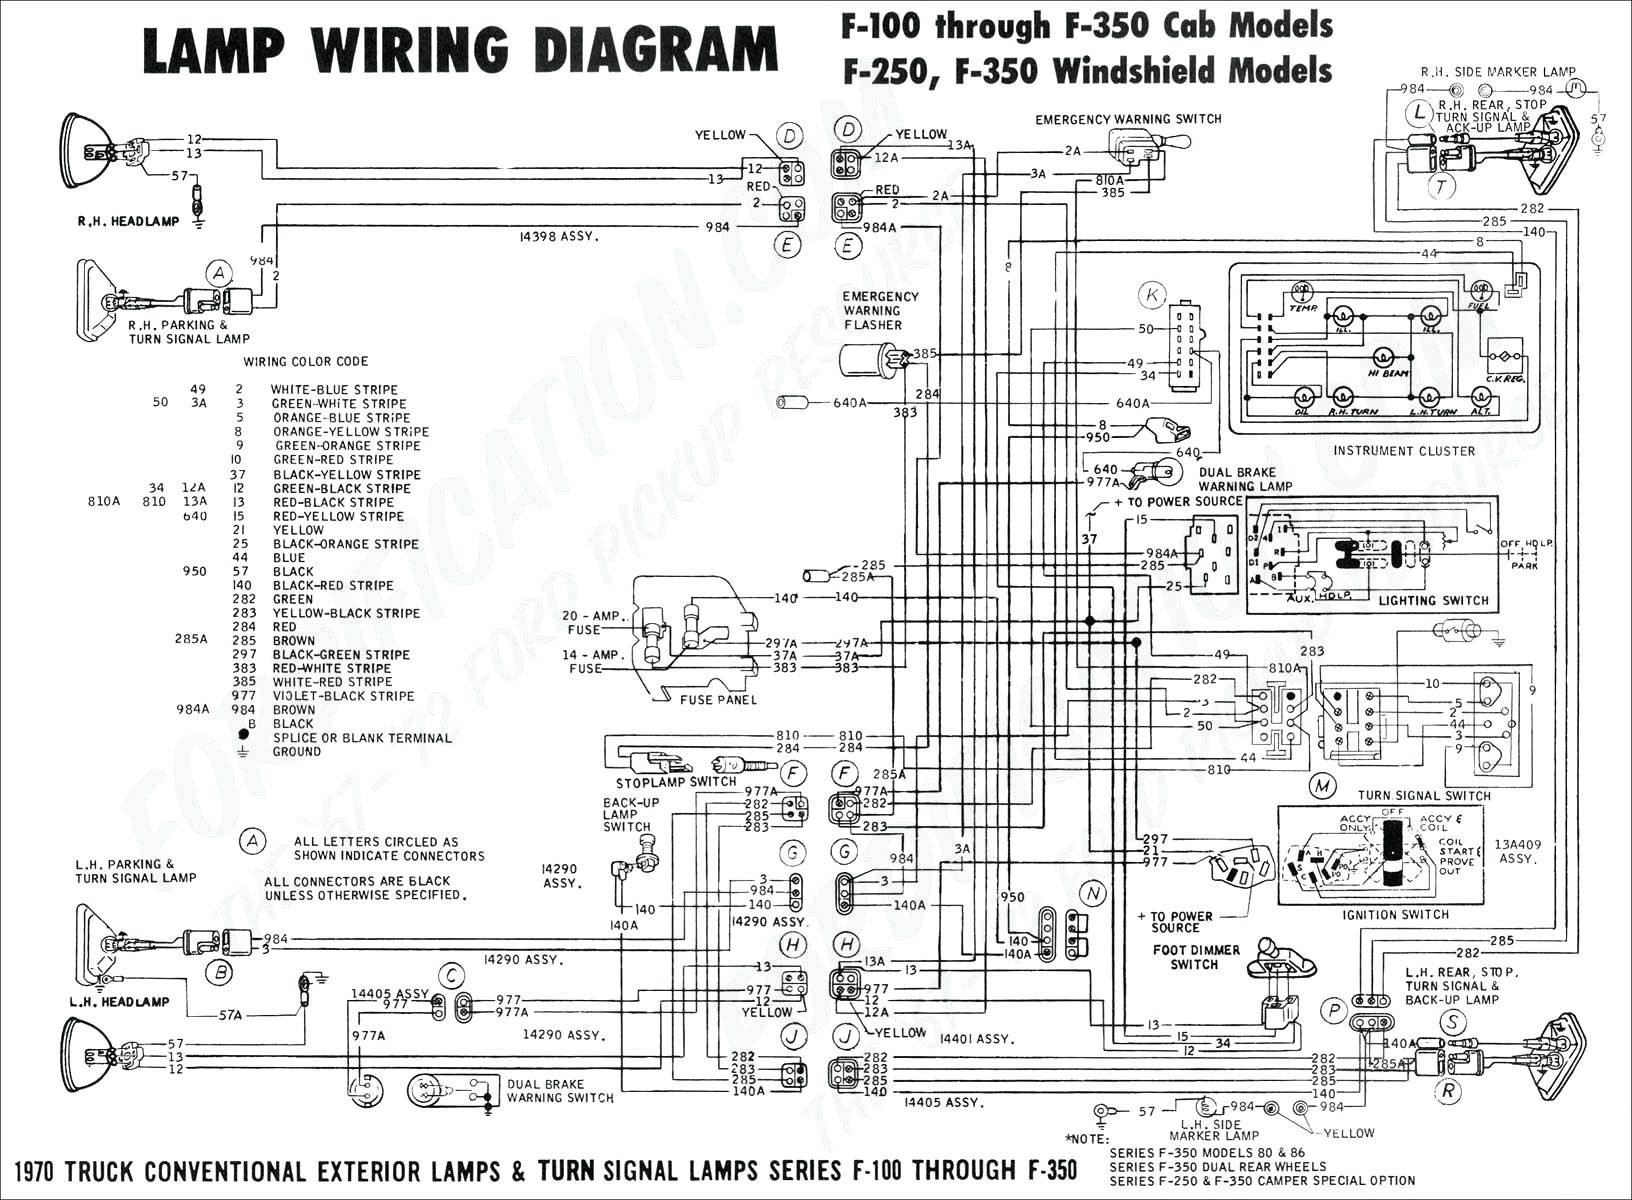 2005 Dodge Neon Engine Diagram 05 Dodge Neon Wiring Diagram Wiring Diagram toolbox Of 2005 Dodge Neon Engine Diagram